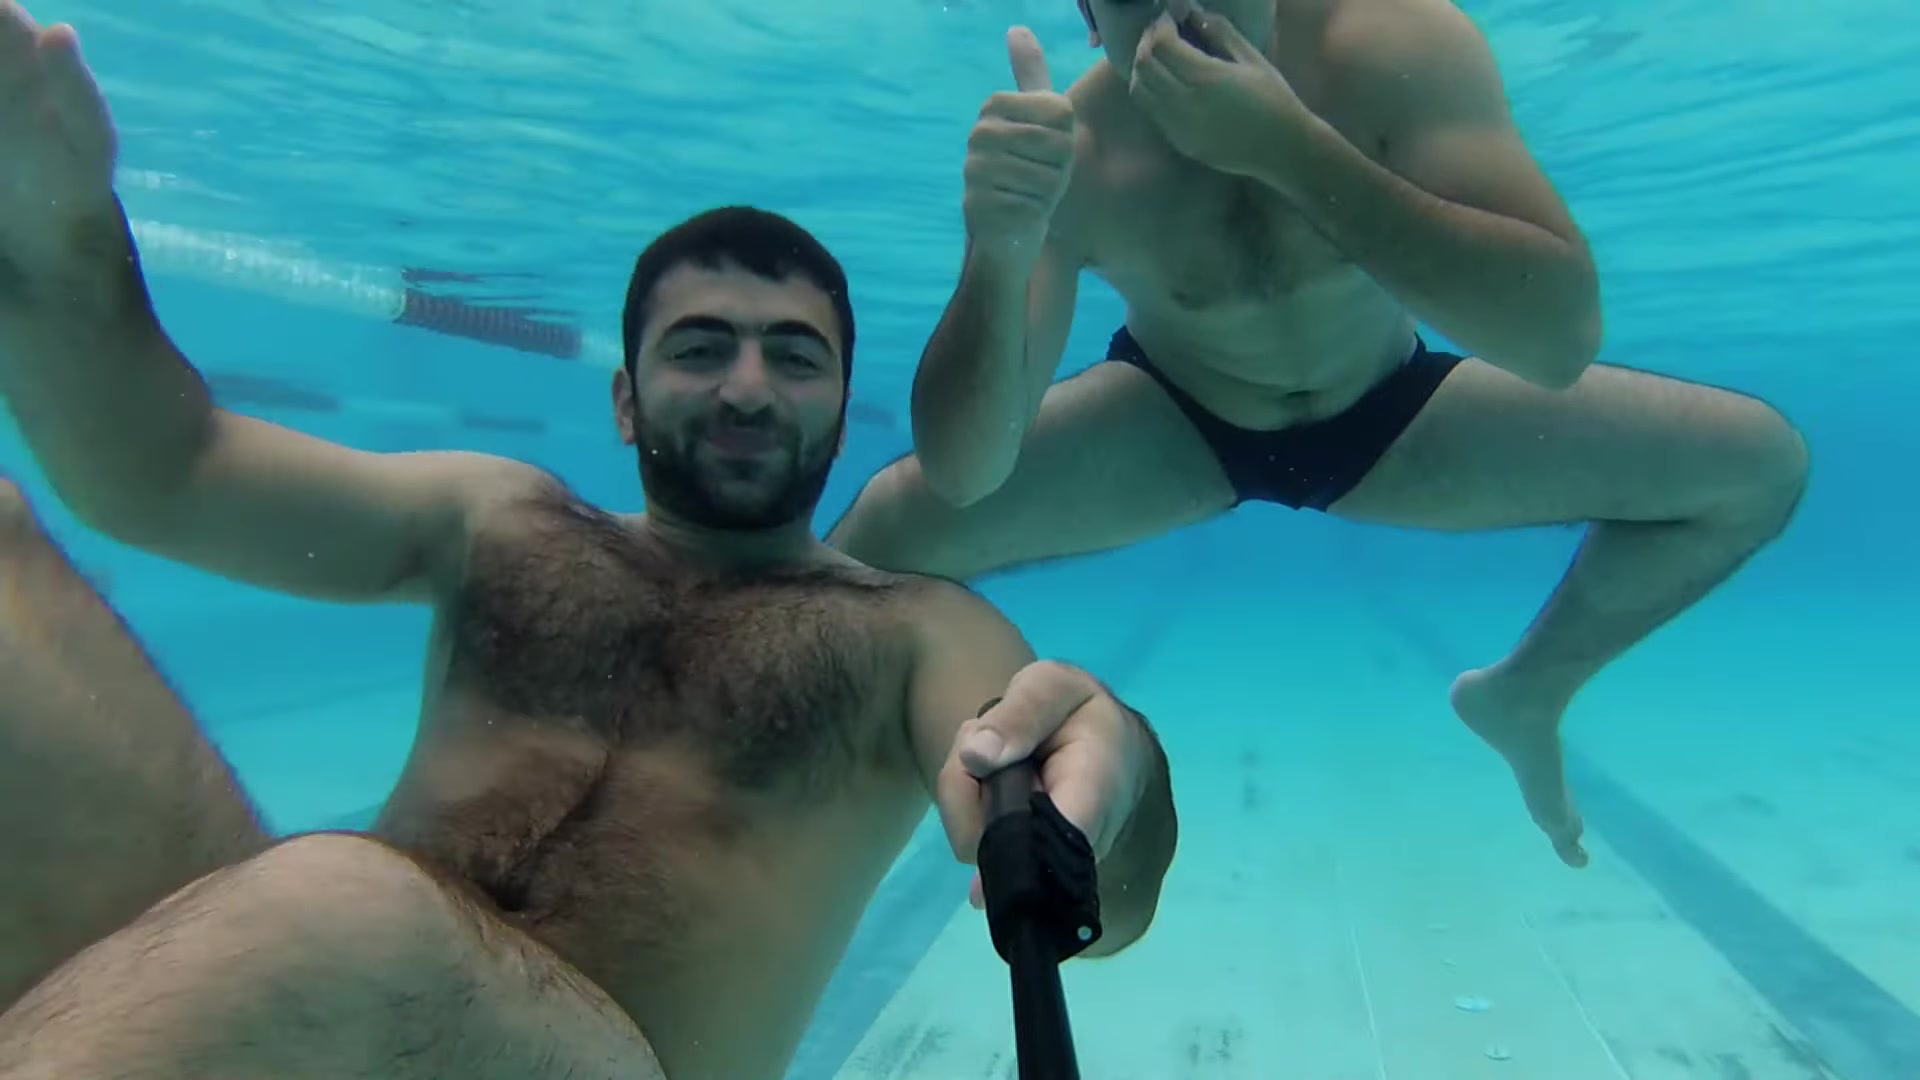 Hairy guys barefaced underwater - video 2